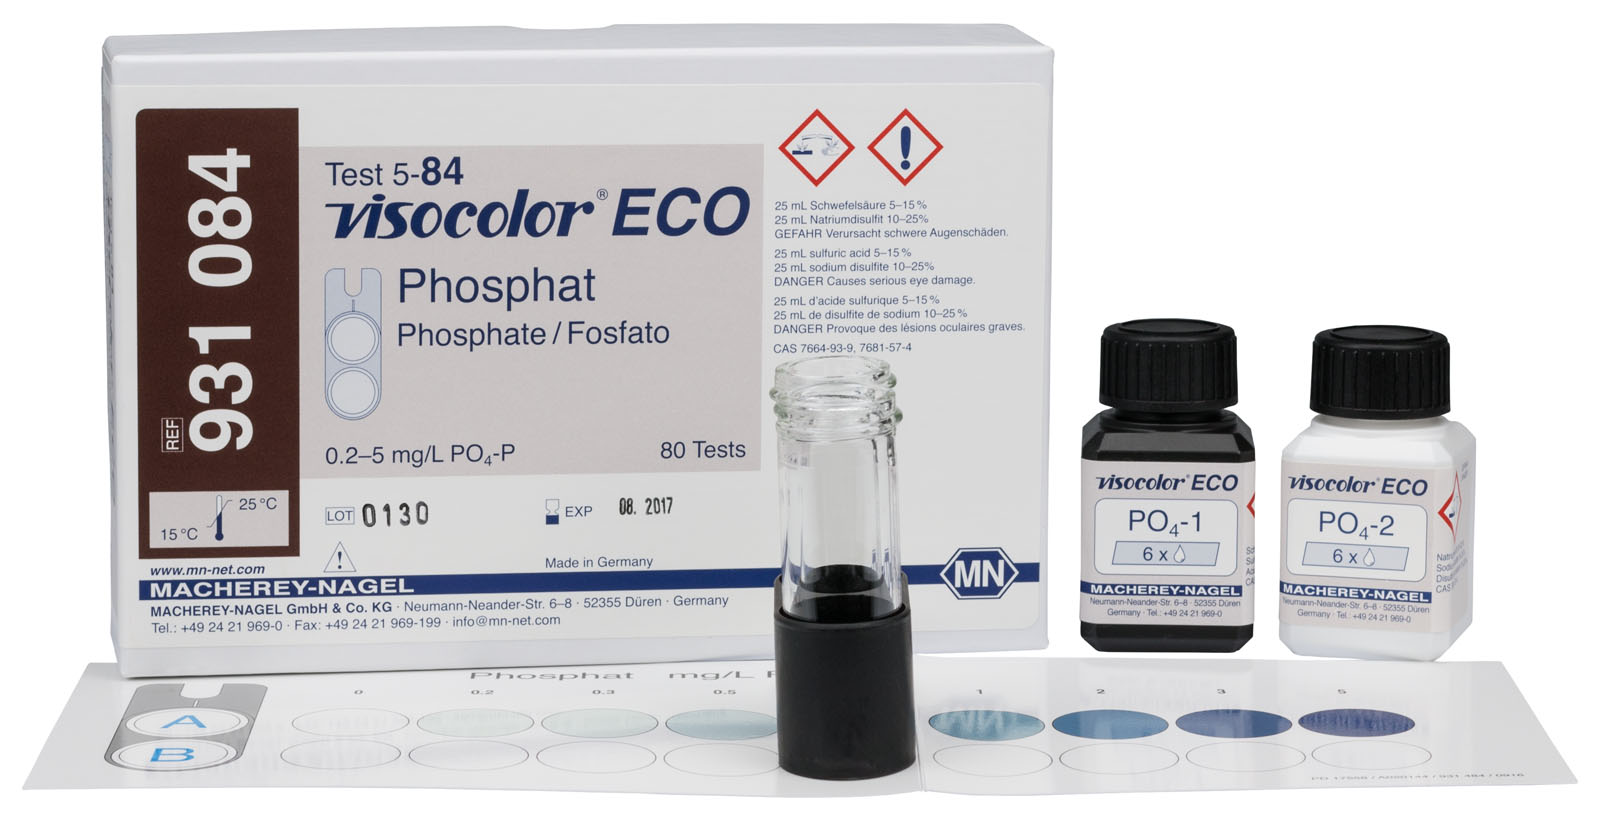 VISOCOLOR ECO Phosphat-Messbesteck